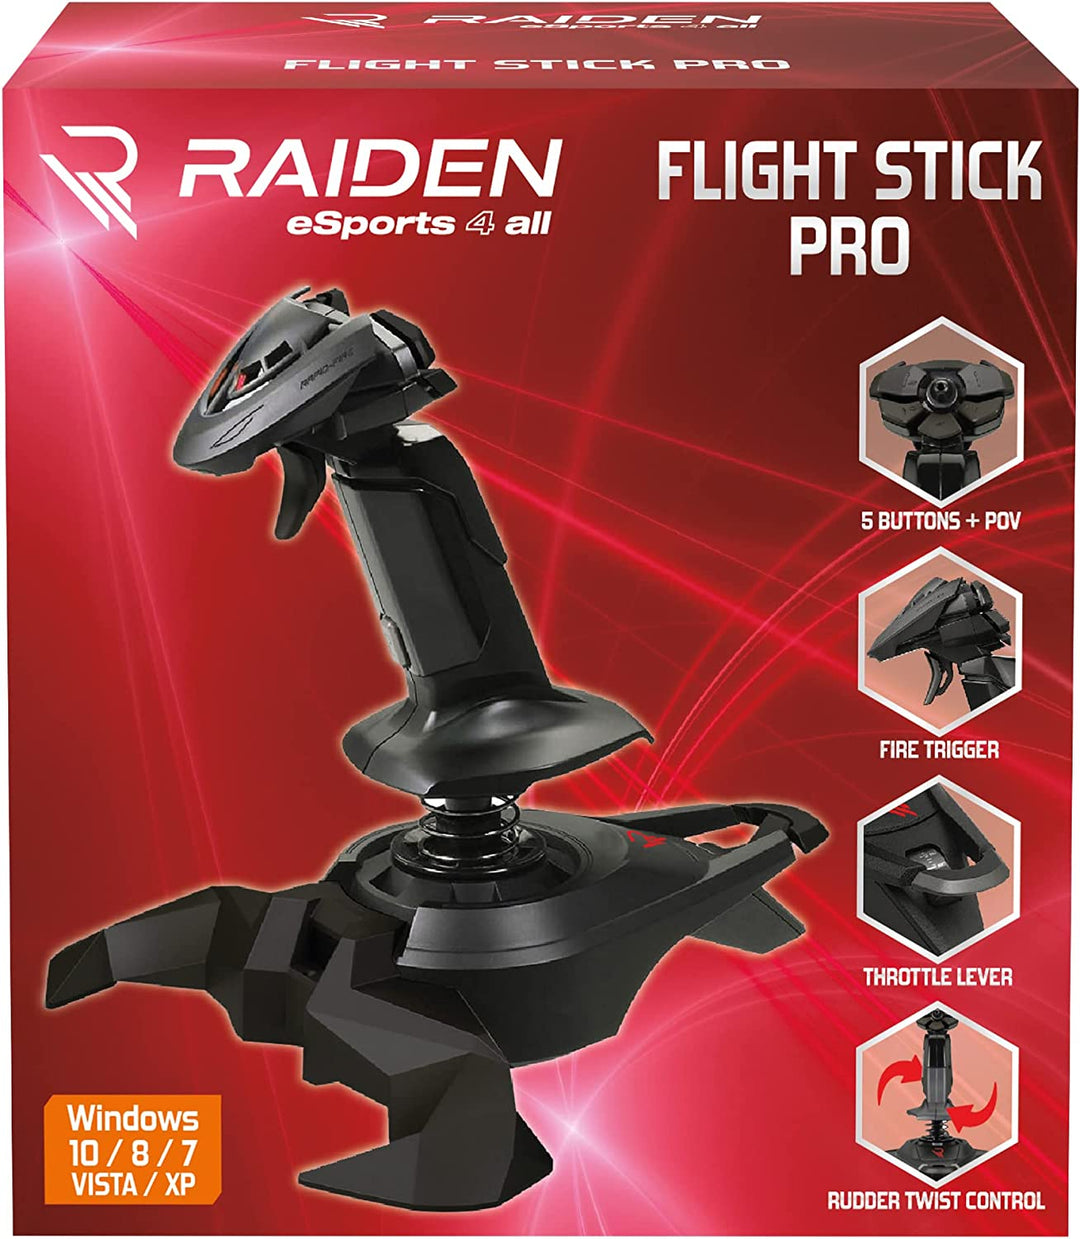 Raiden - Joystick with throttle for flight simulator - Flight Stick Pro Controll